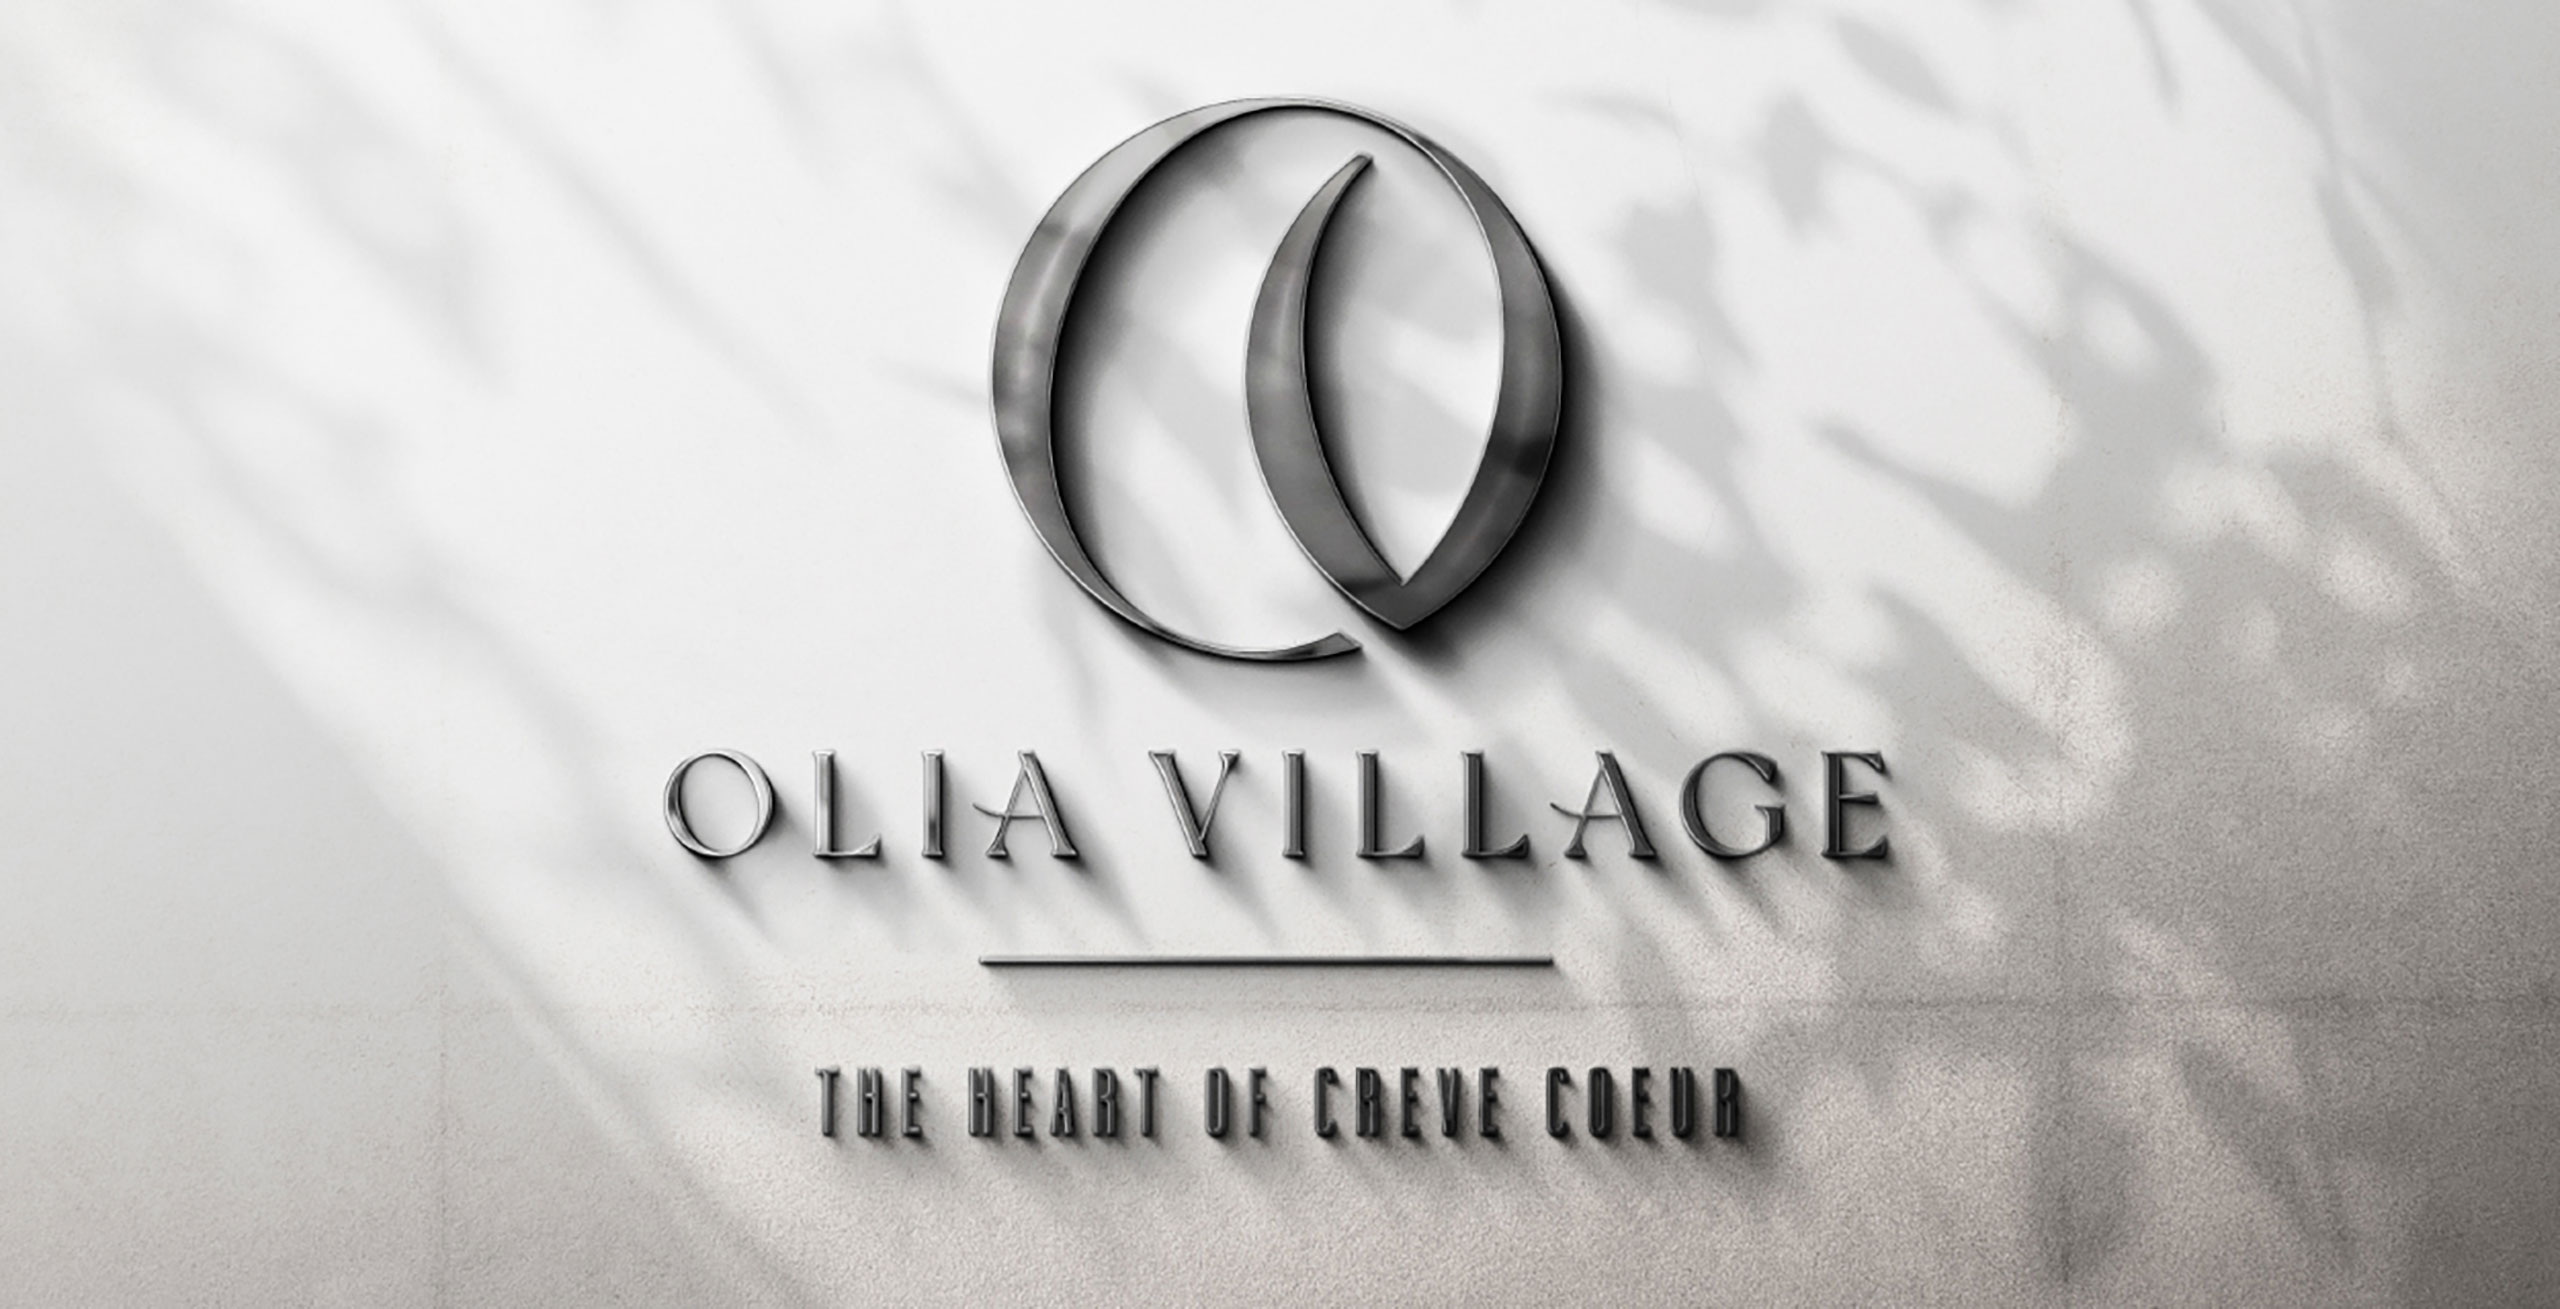 olia village brand and web development